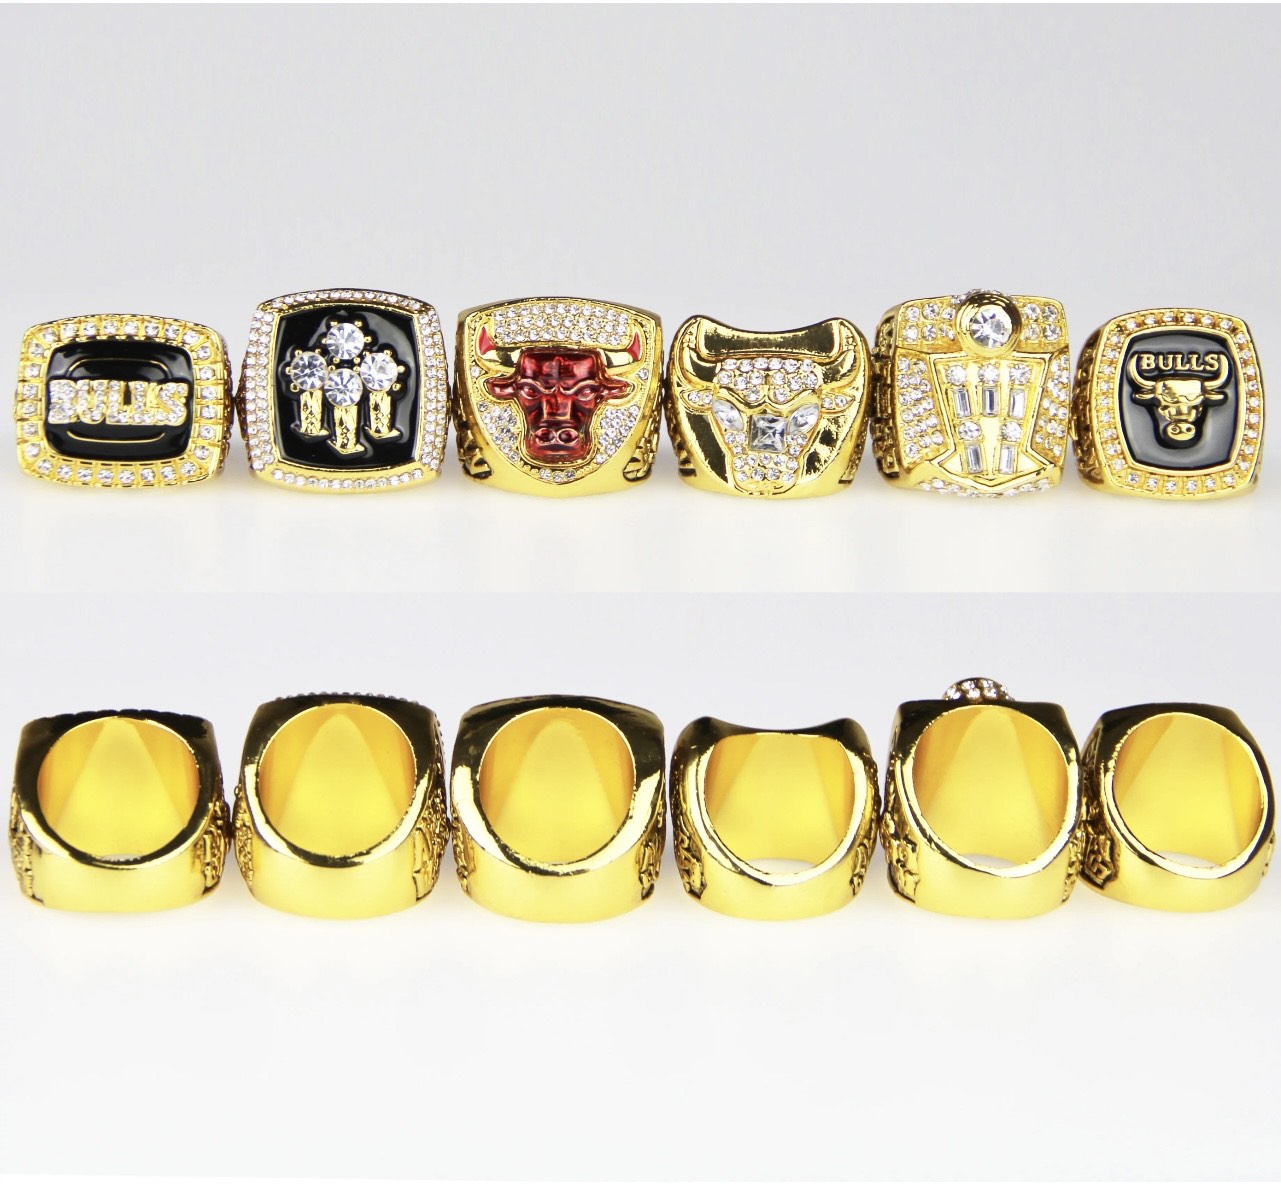 Bulls Championship Rings. Six rings in set. Basketball Michael Jordan championships. Gift sports. basketball Fan.